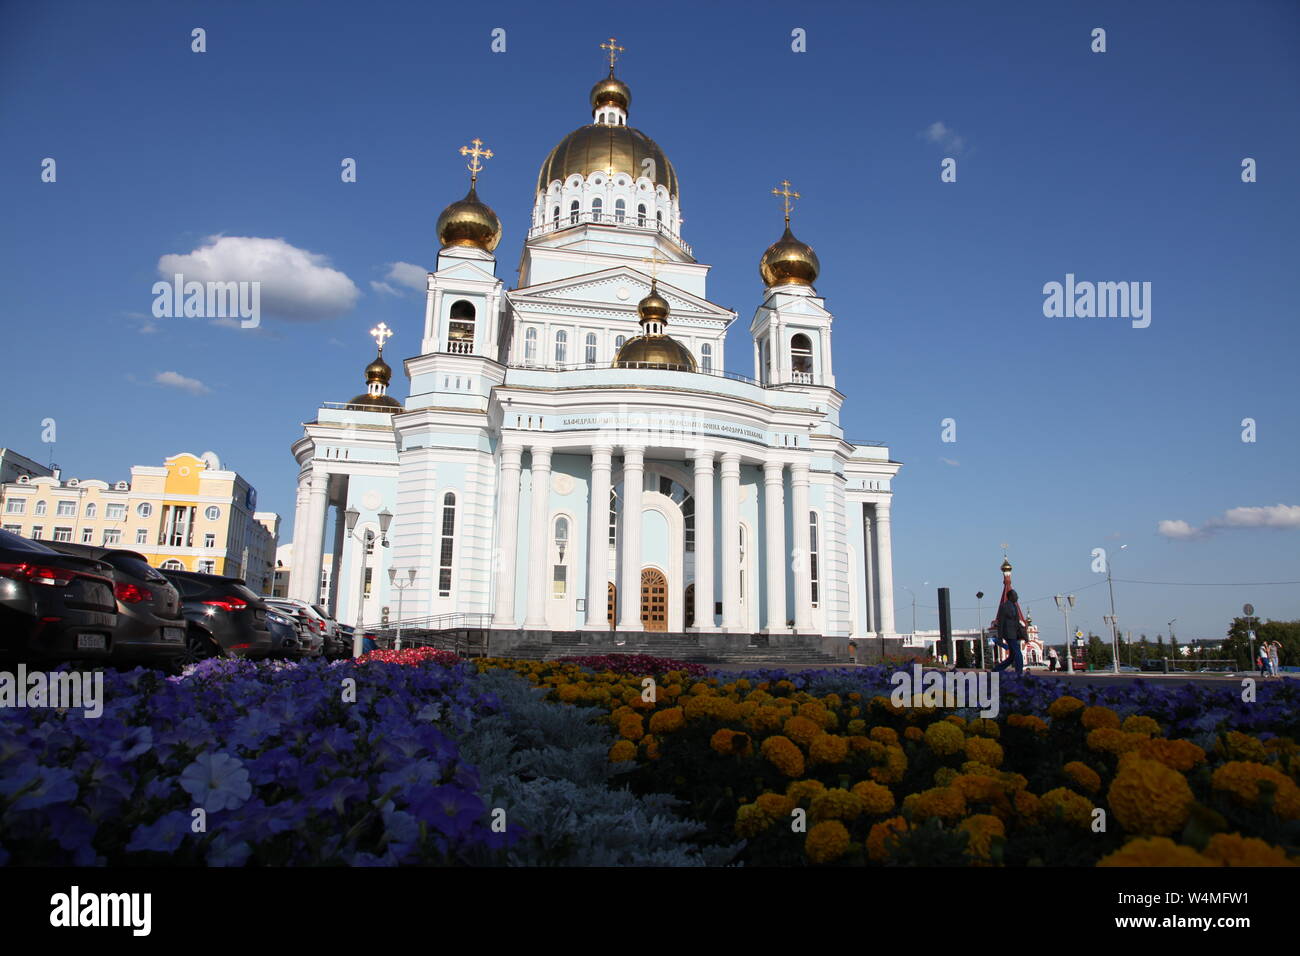 The cathedral of St. Warrior Theodor Ushakov in Saransk, Mordovia, Russia Stock Photo